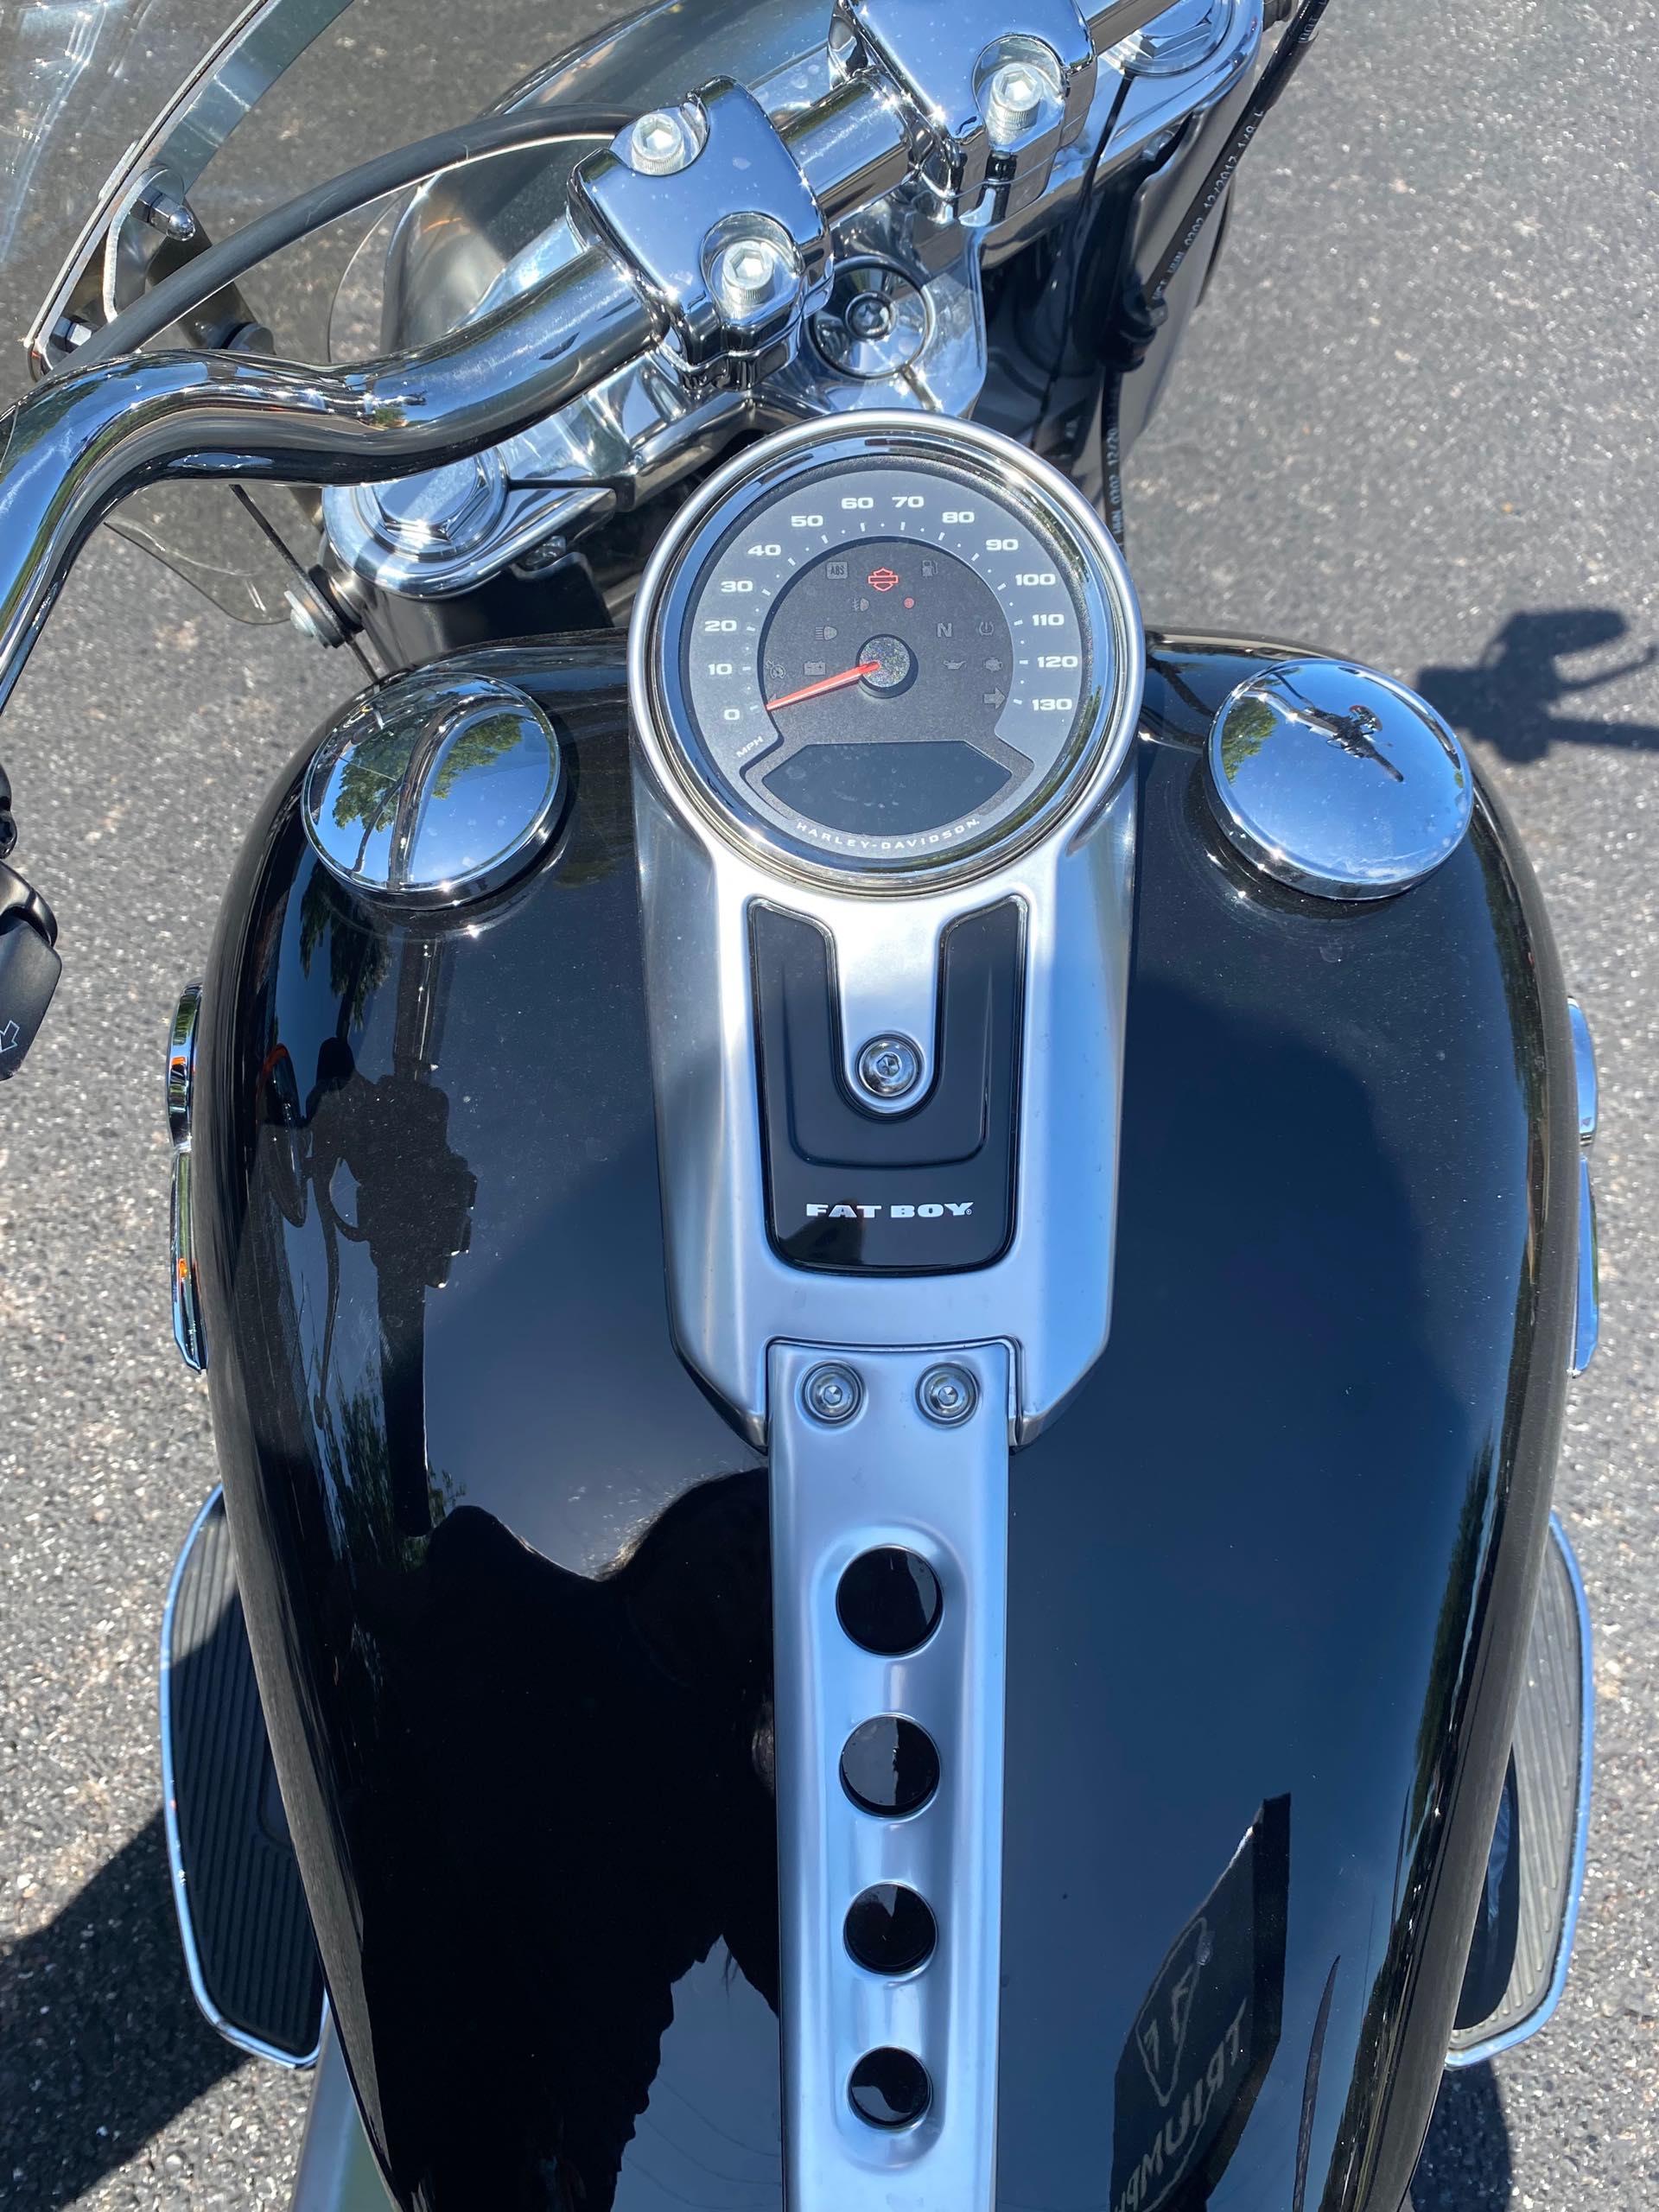 2018 Harley-Davidson Softail Fat Boy 114 at Tampa Triumph, Tampa, FL 33614